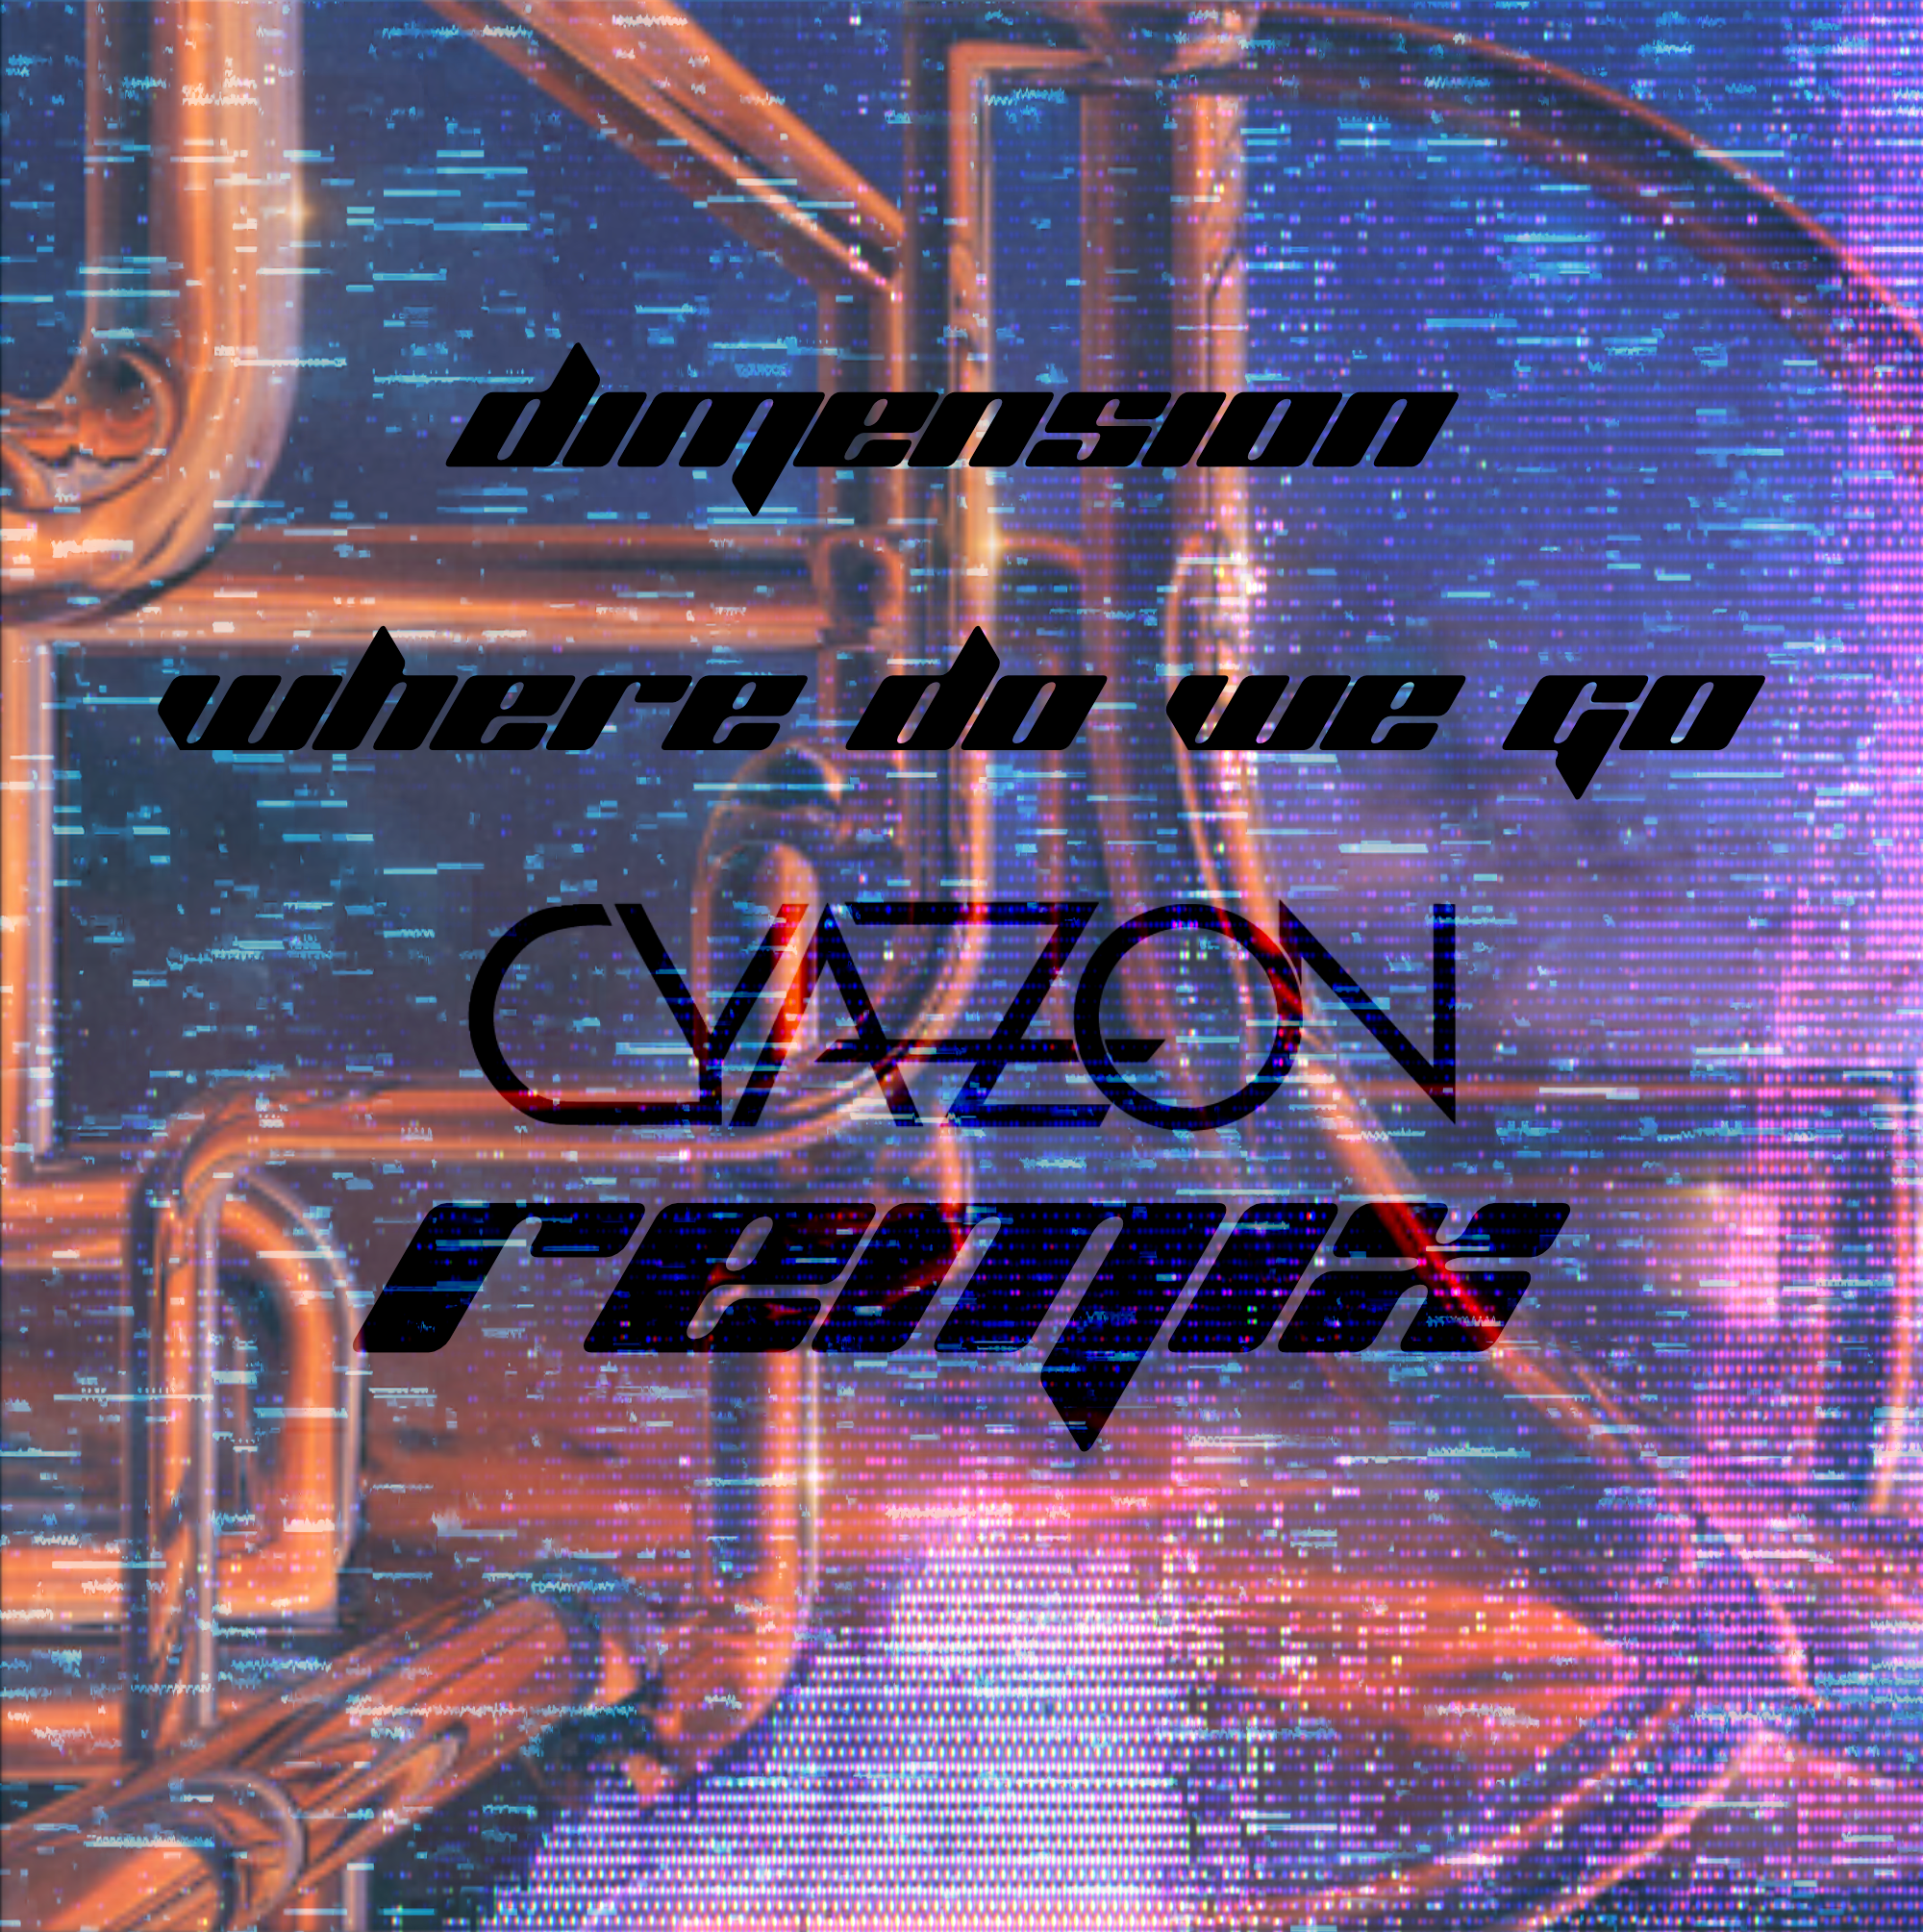 Cyazon Transforms Dimension’s ‘Where Do We Go’ in Dynamic New Remix